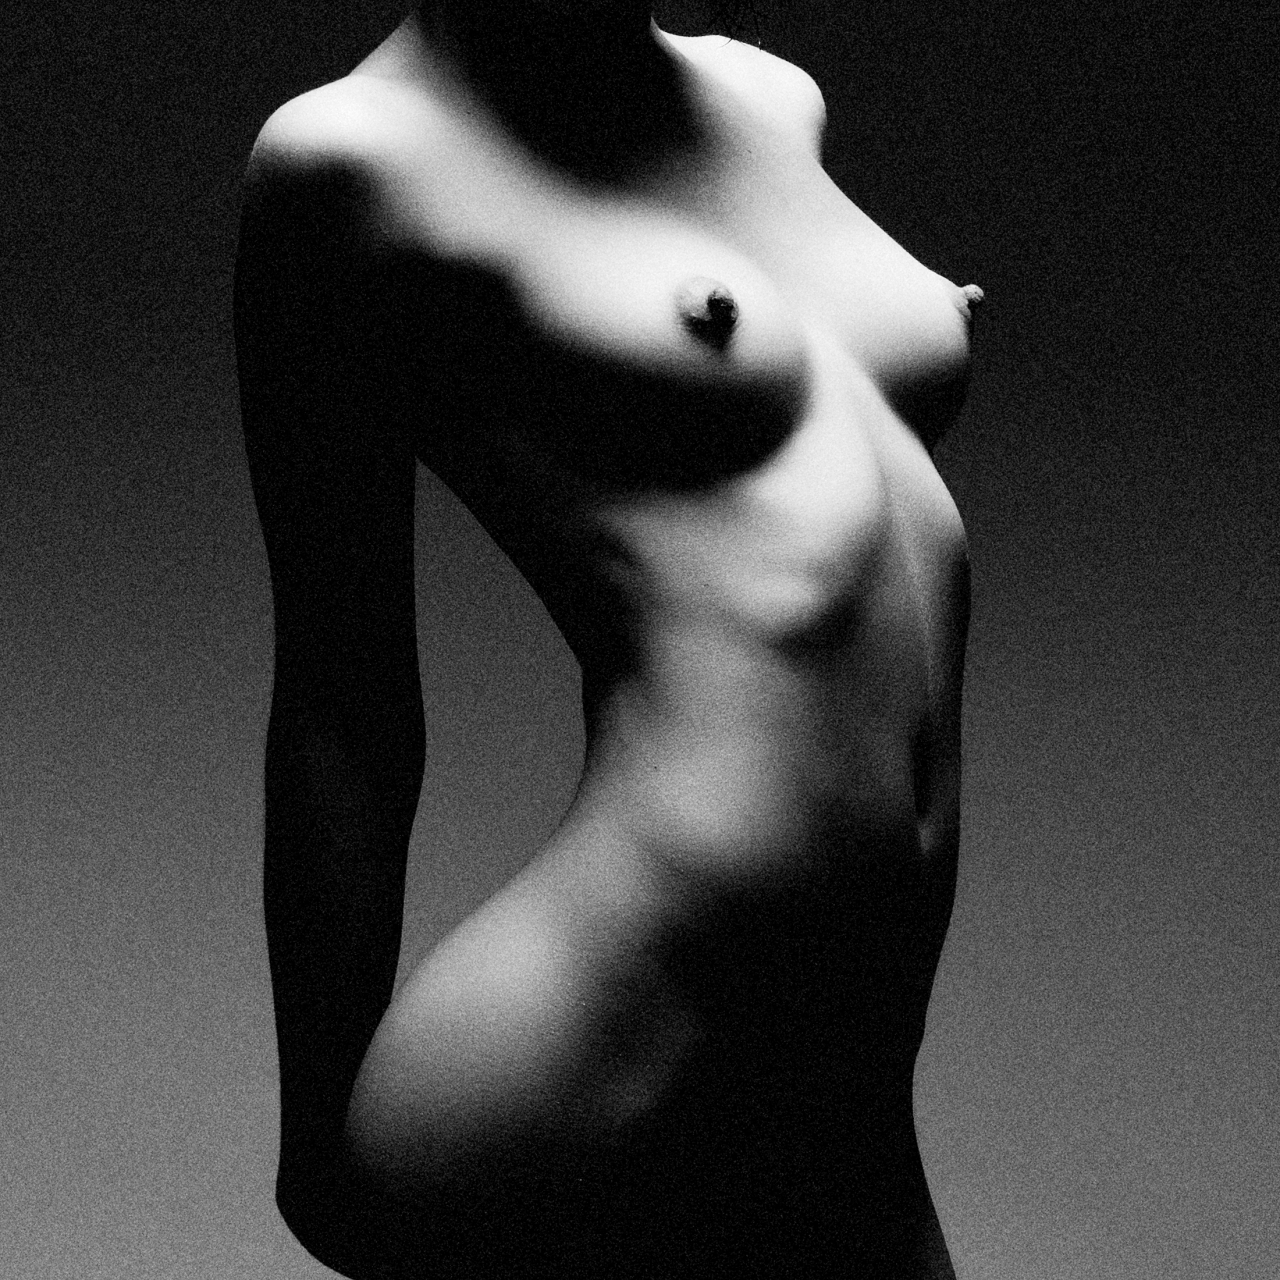 Fvck Art; Get Naked and Take Photos! Model: Mikki ©2011 Ken Davie